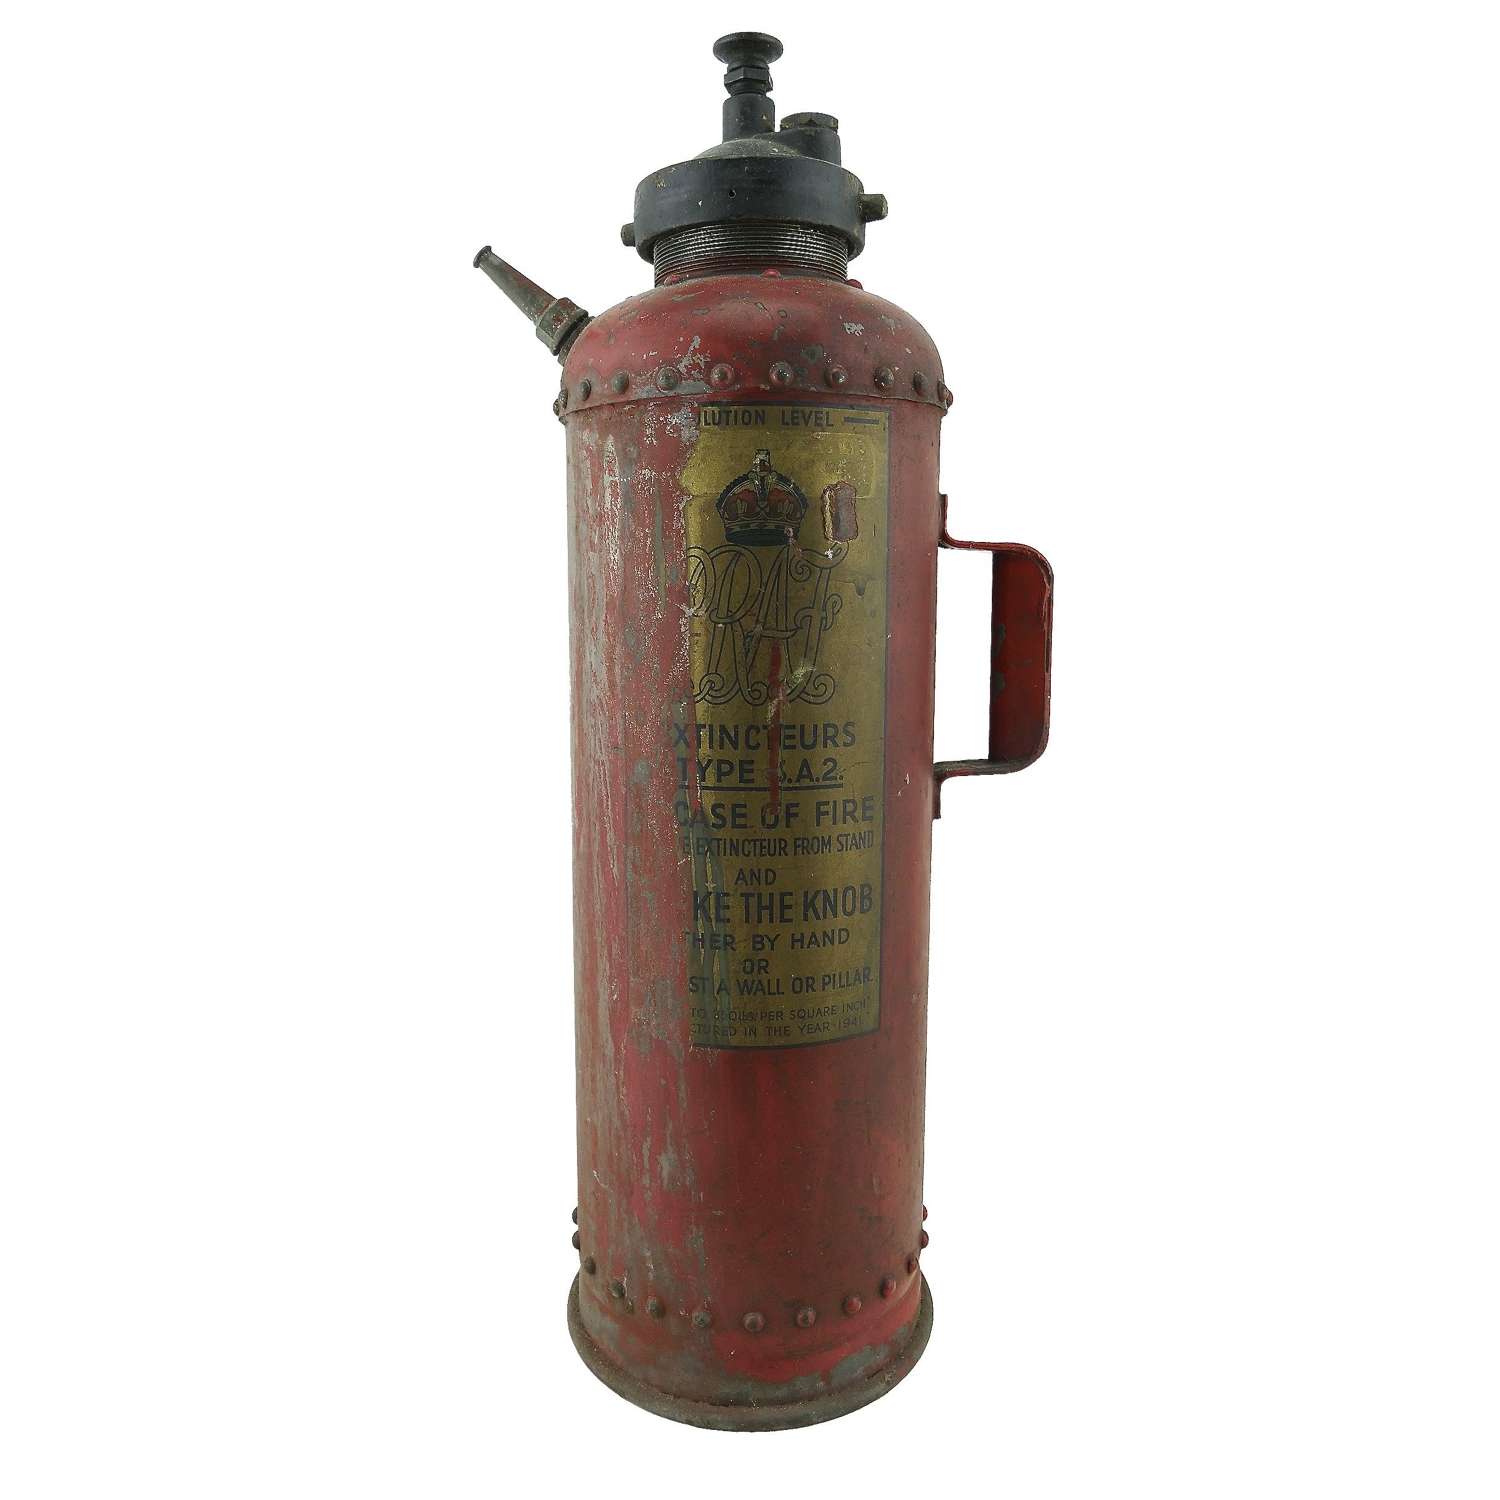 RAF fire extinguisher, c.1941